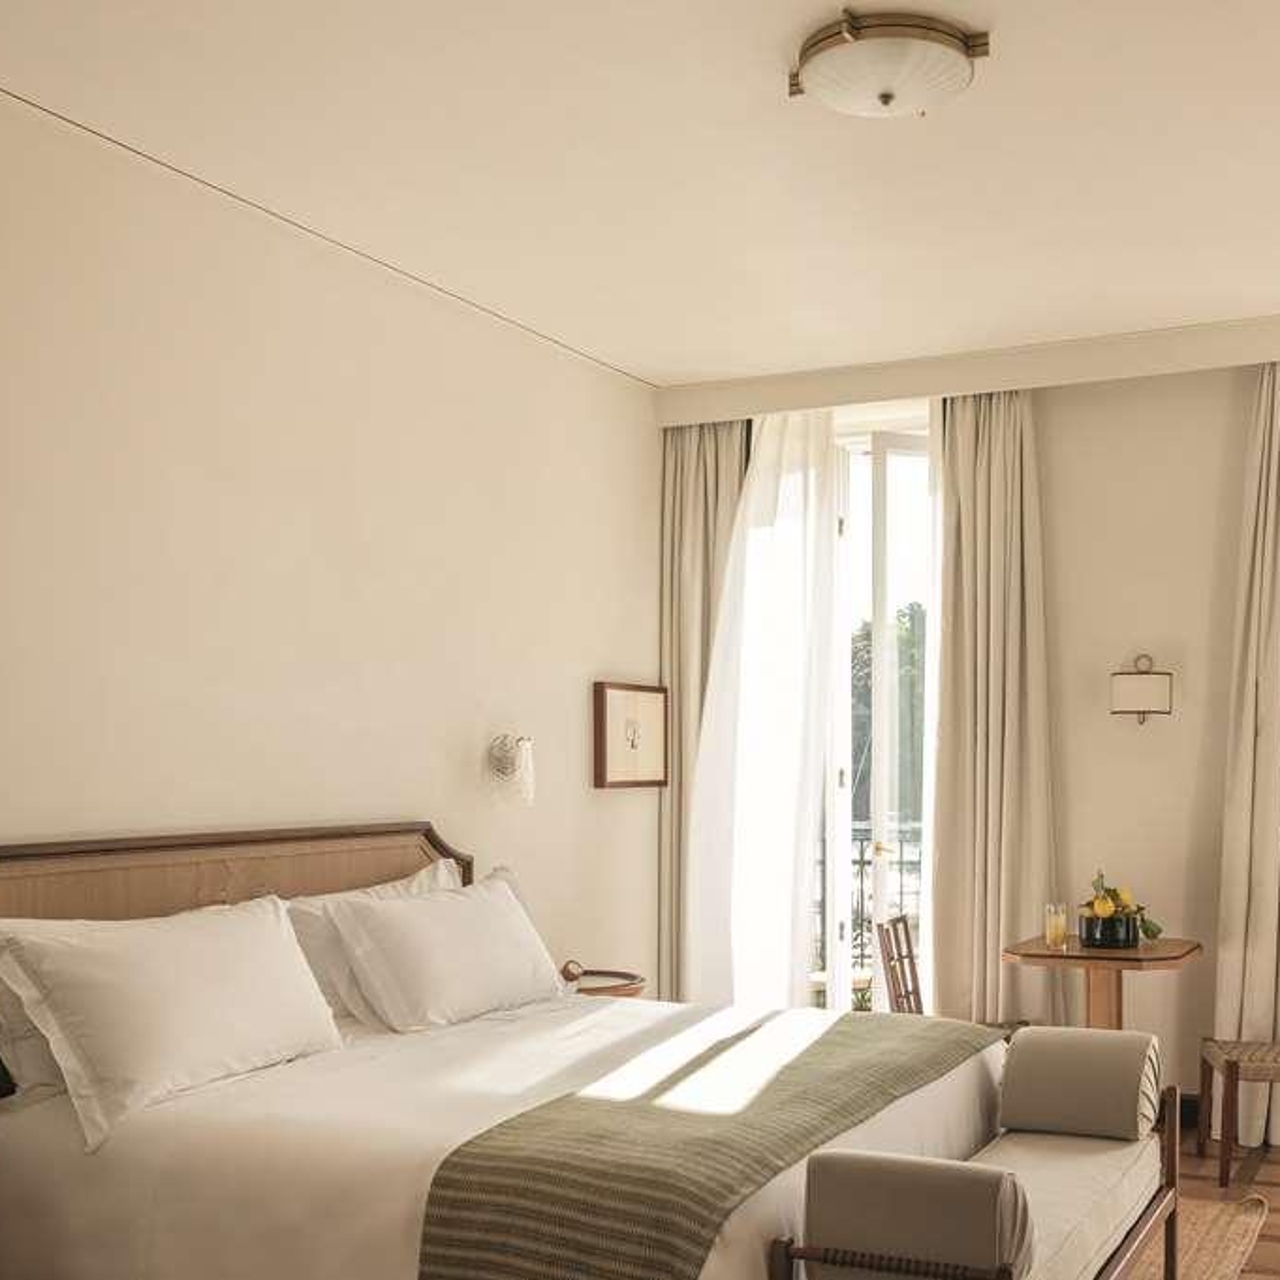 Splendido Mare hotel room - Picture of Splendido, A Belmond Hotel